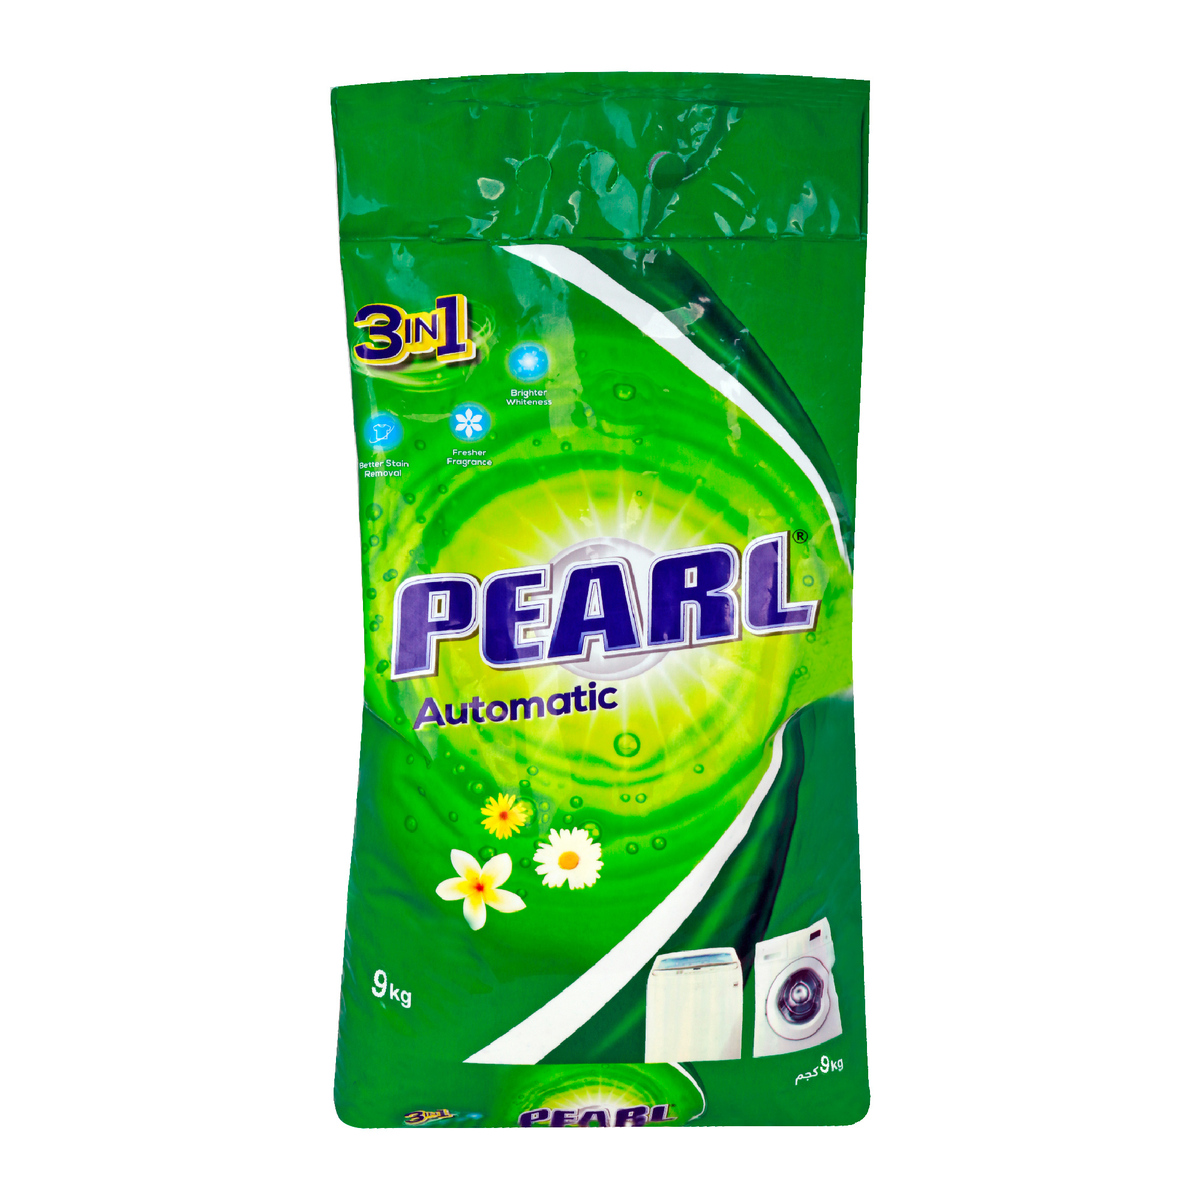 Pearl Automatic Washing Powder 3in1 9kg